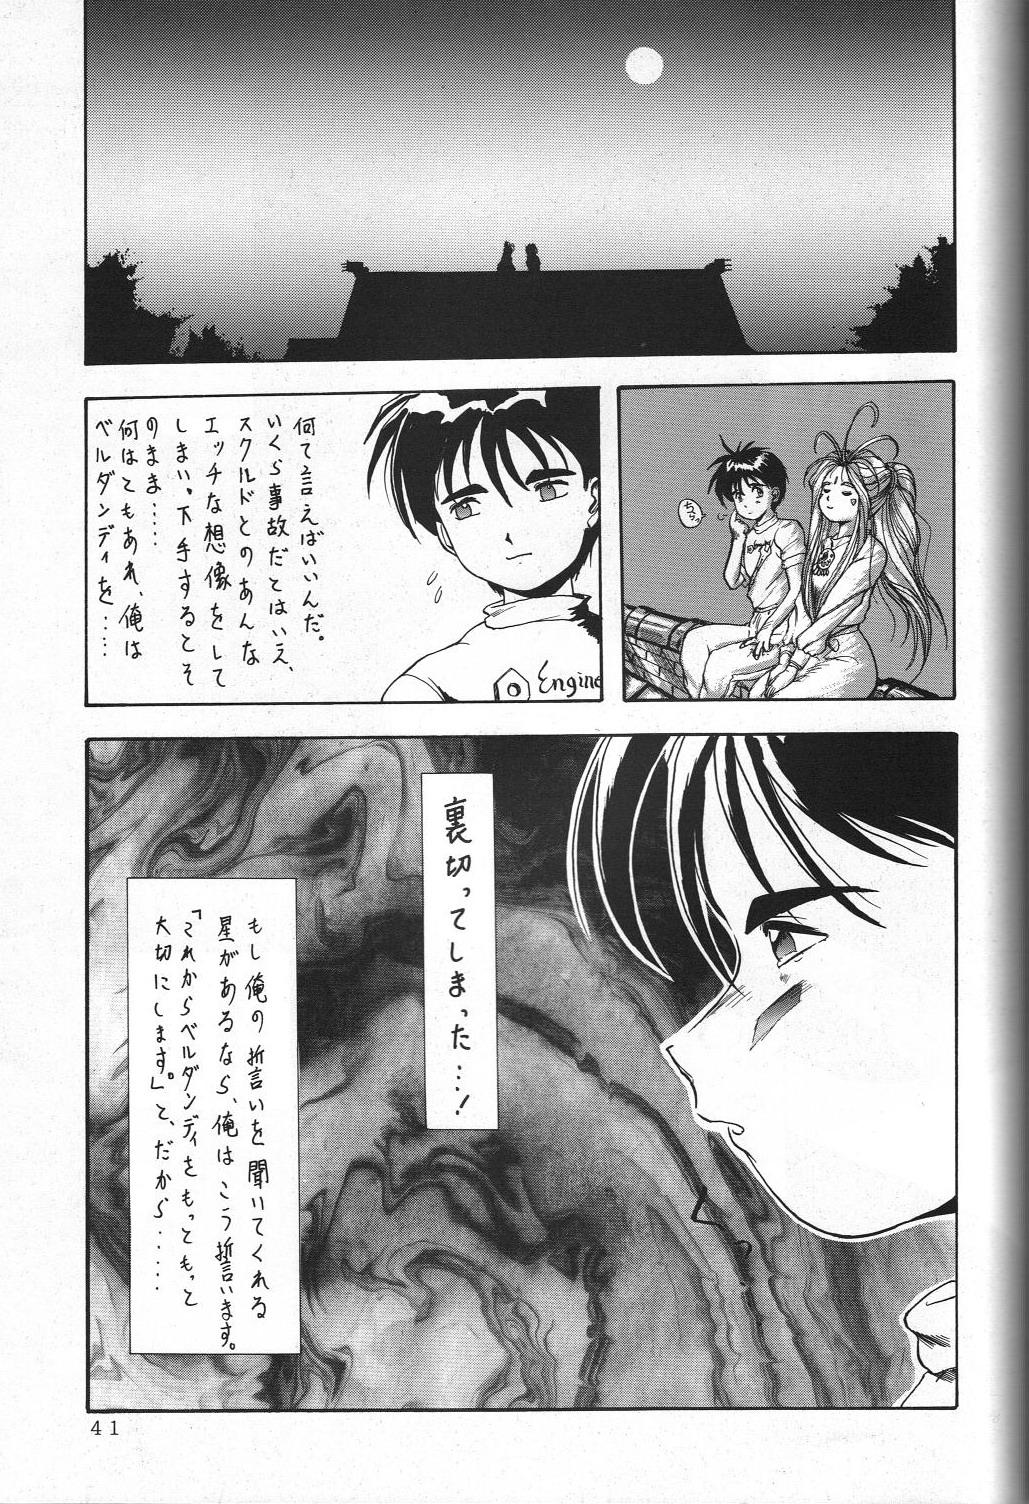 THE SECRET OF Chimatsuriya Vol. 5 39